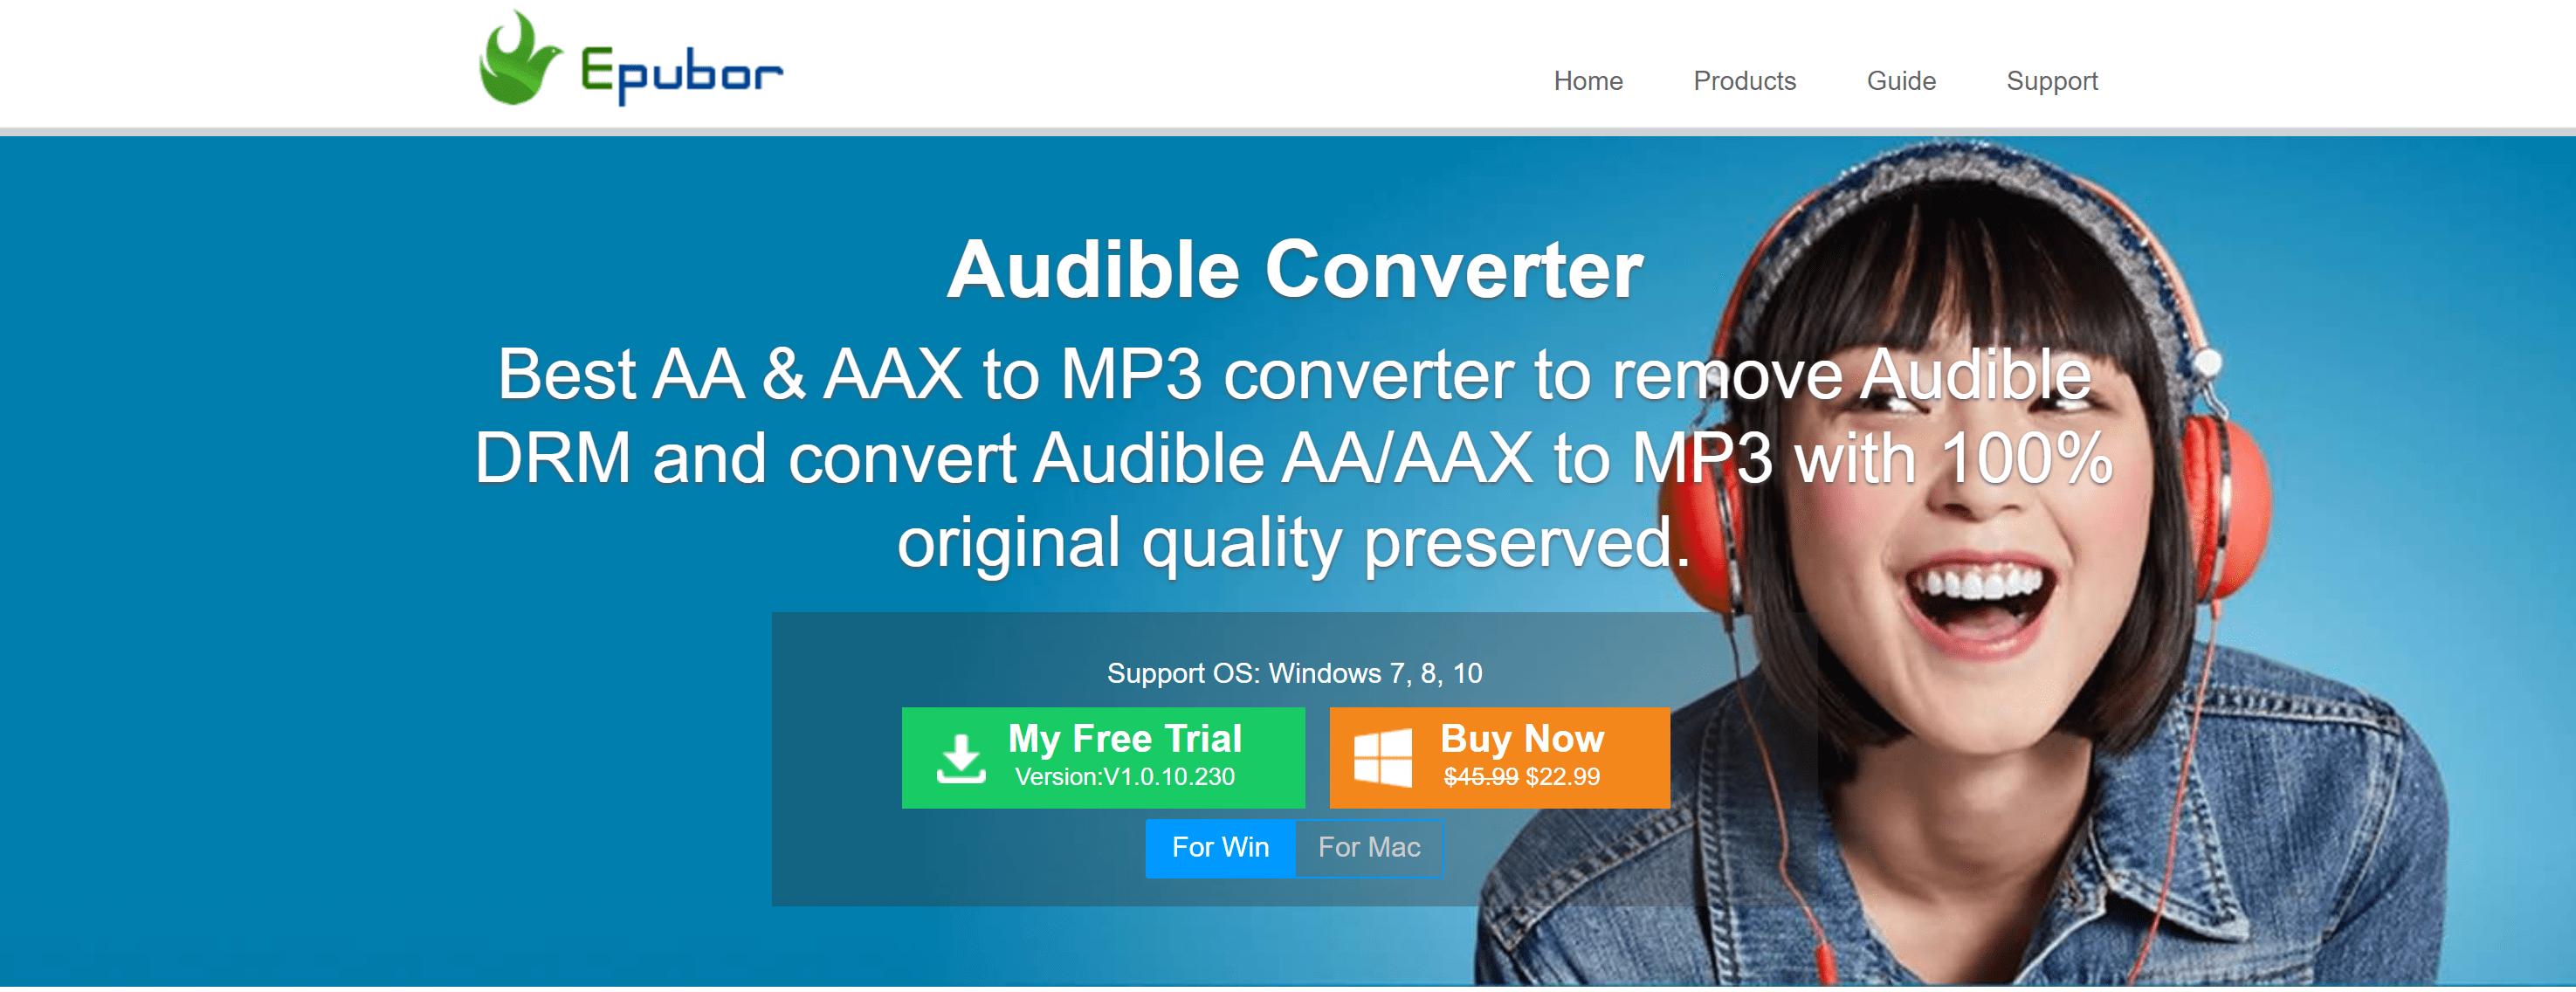 epubor audible converter for mac